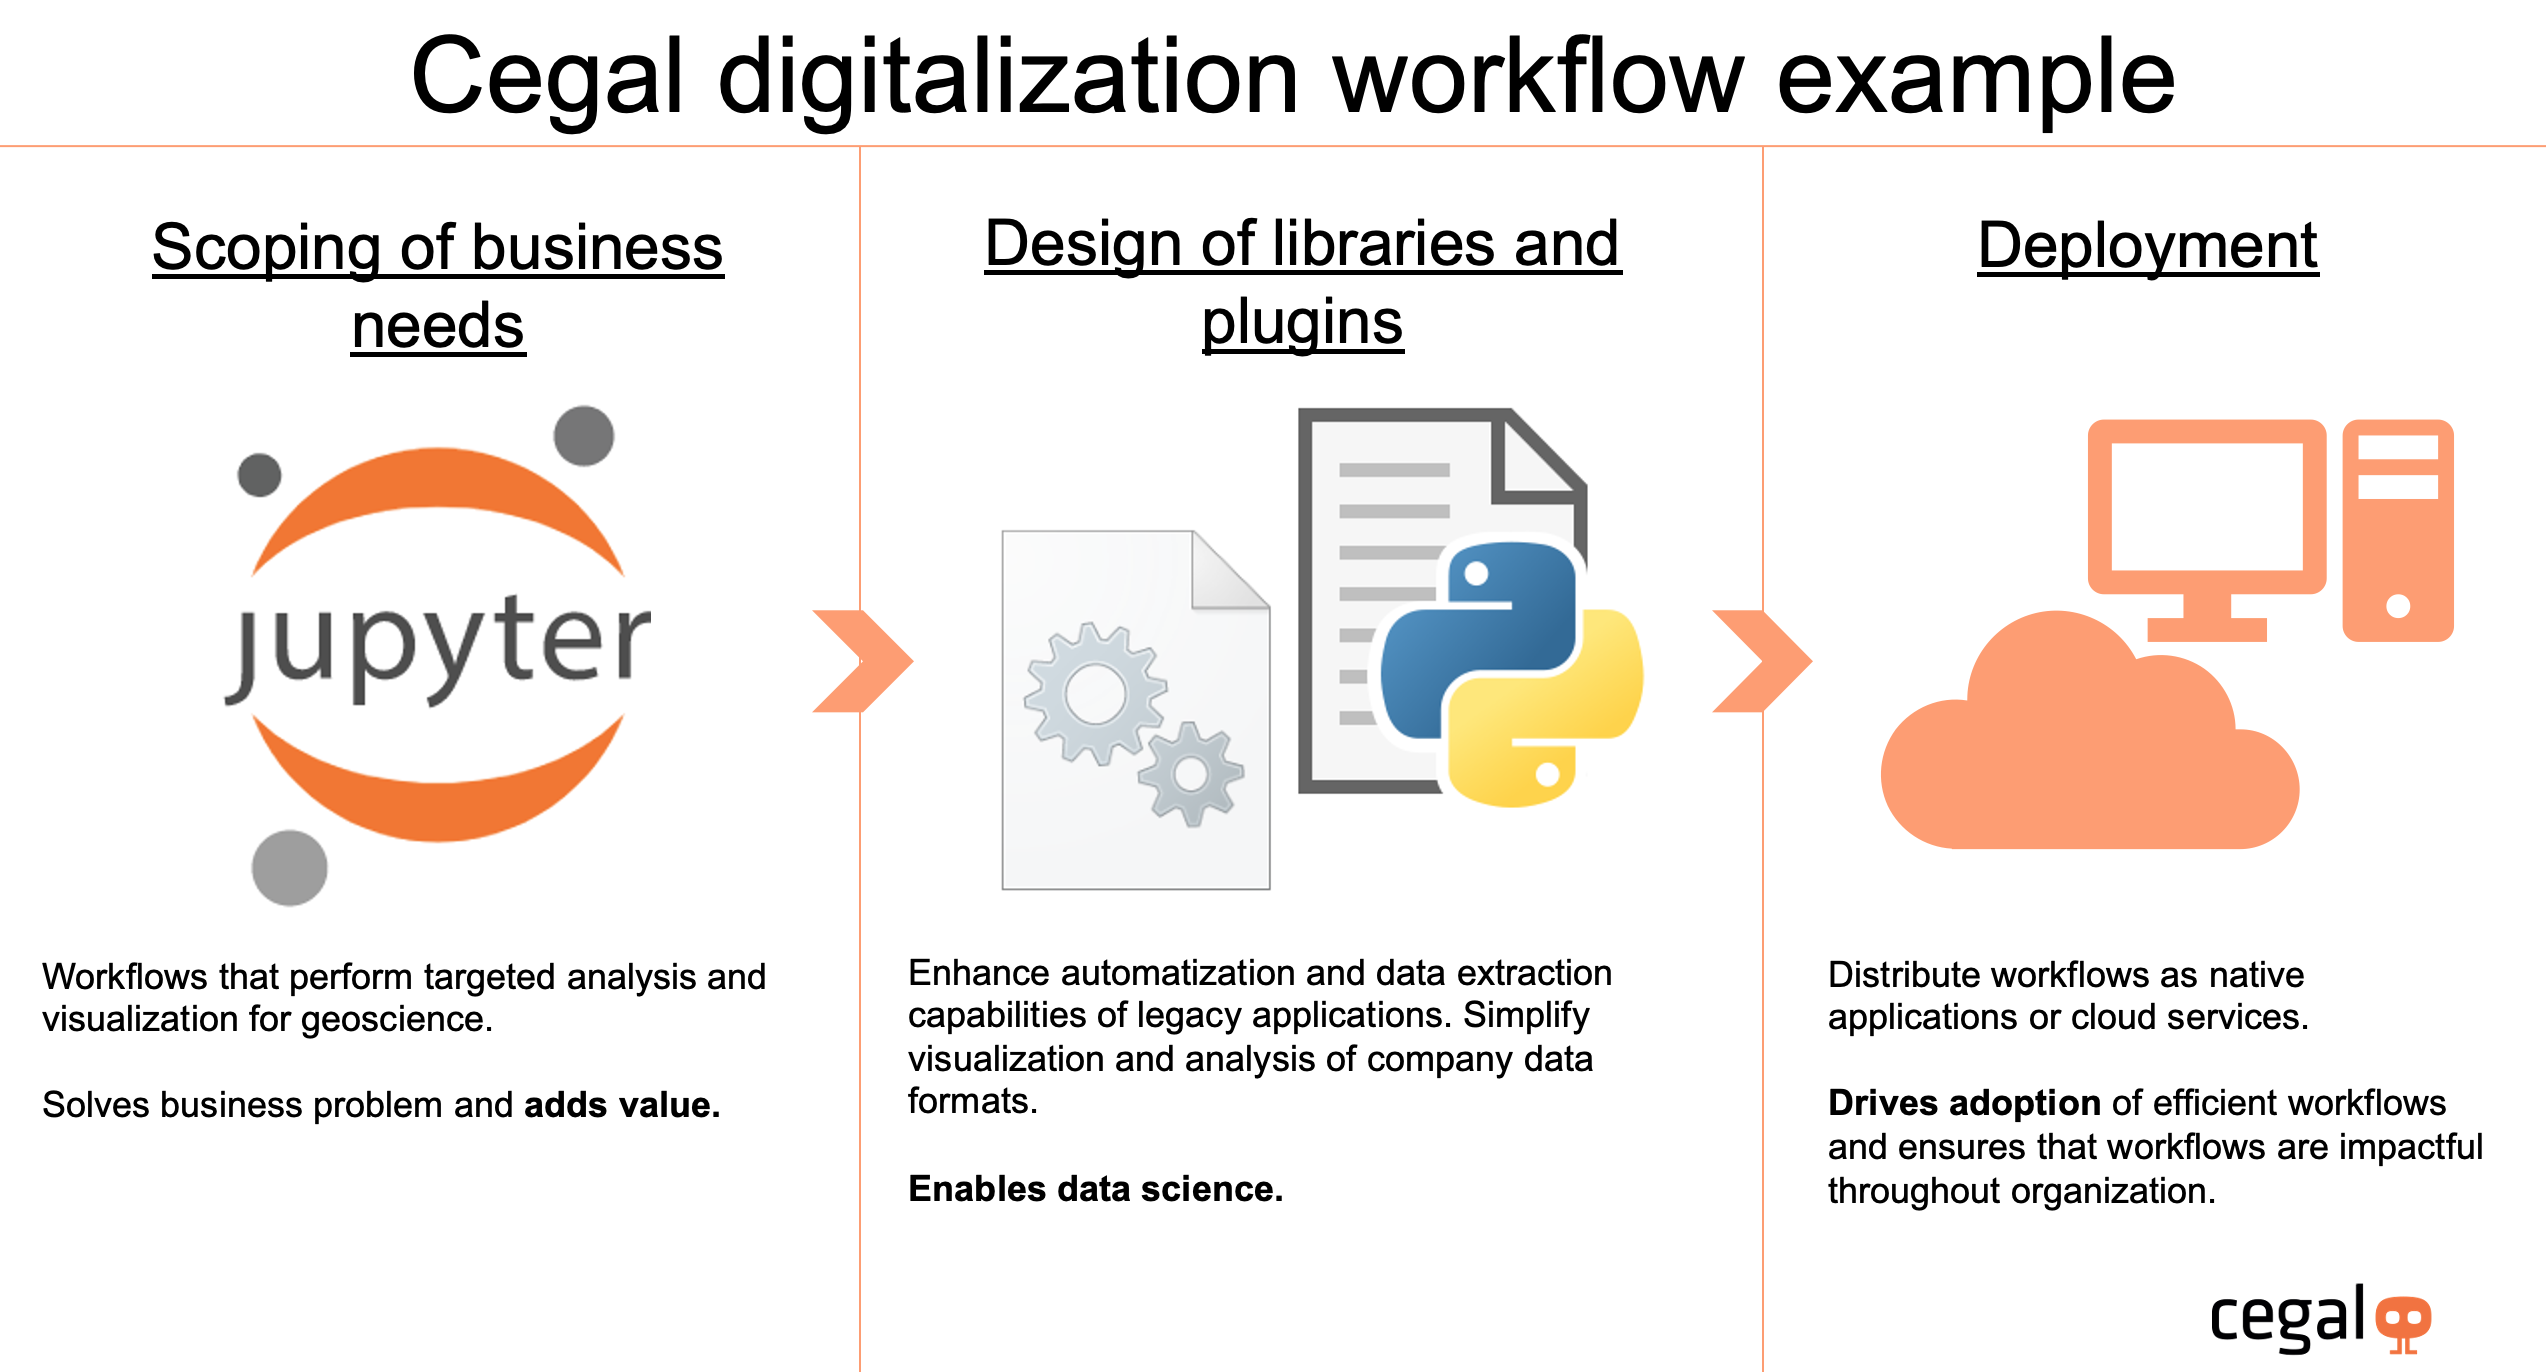 Cegal digitalization workflow